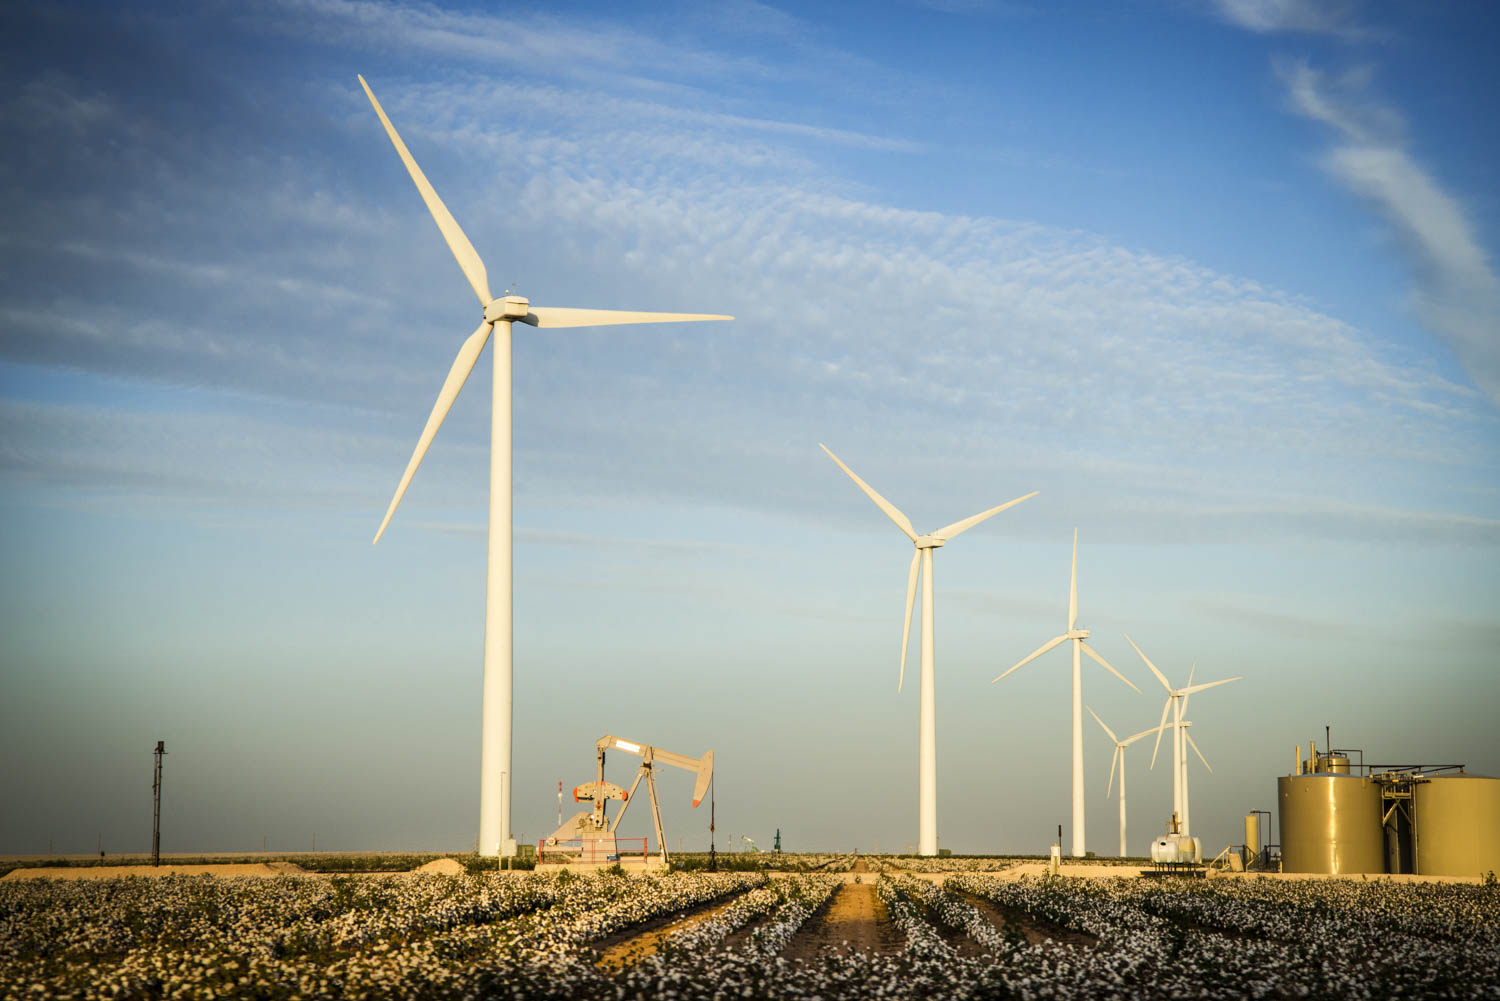 USA: Texas, Martin County, wind turbines